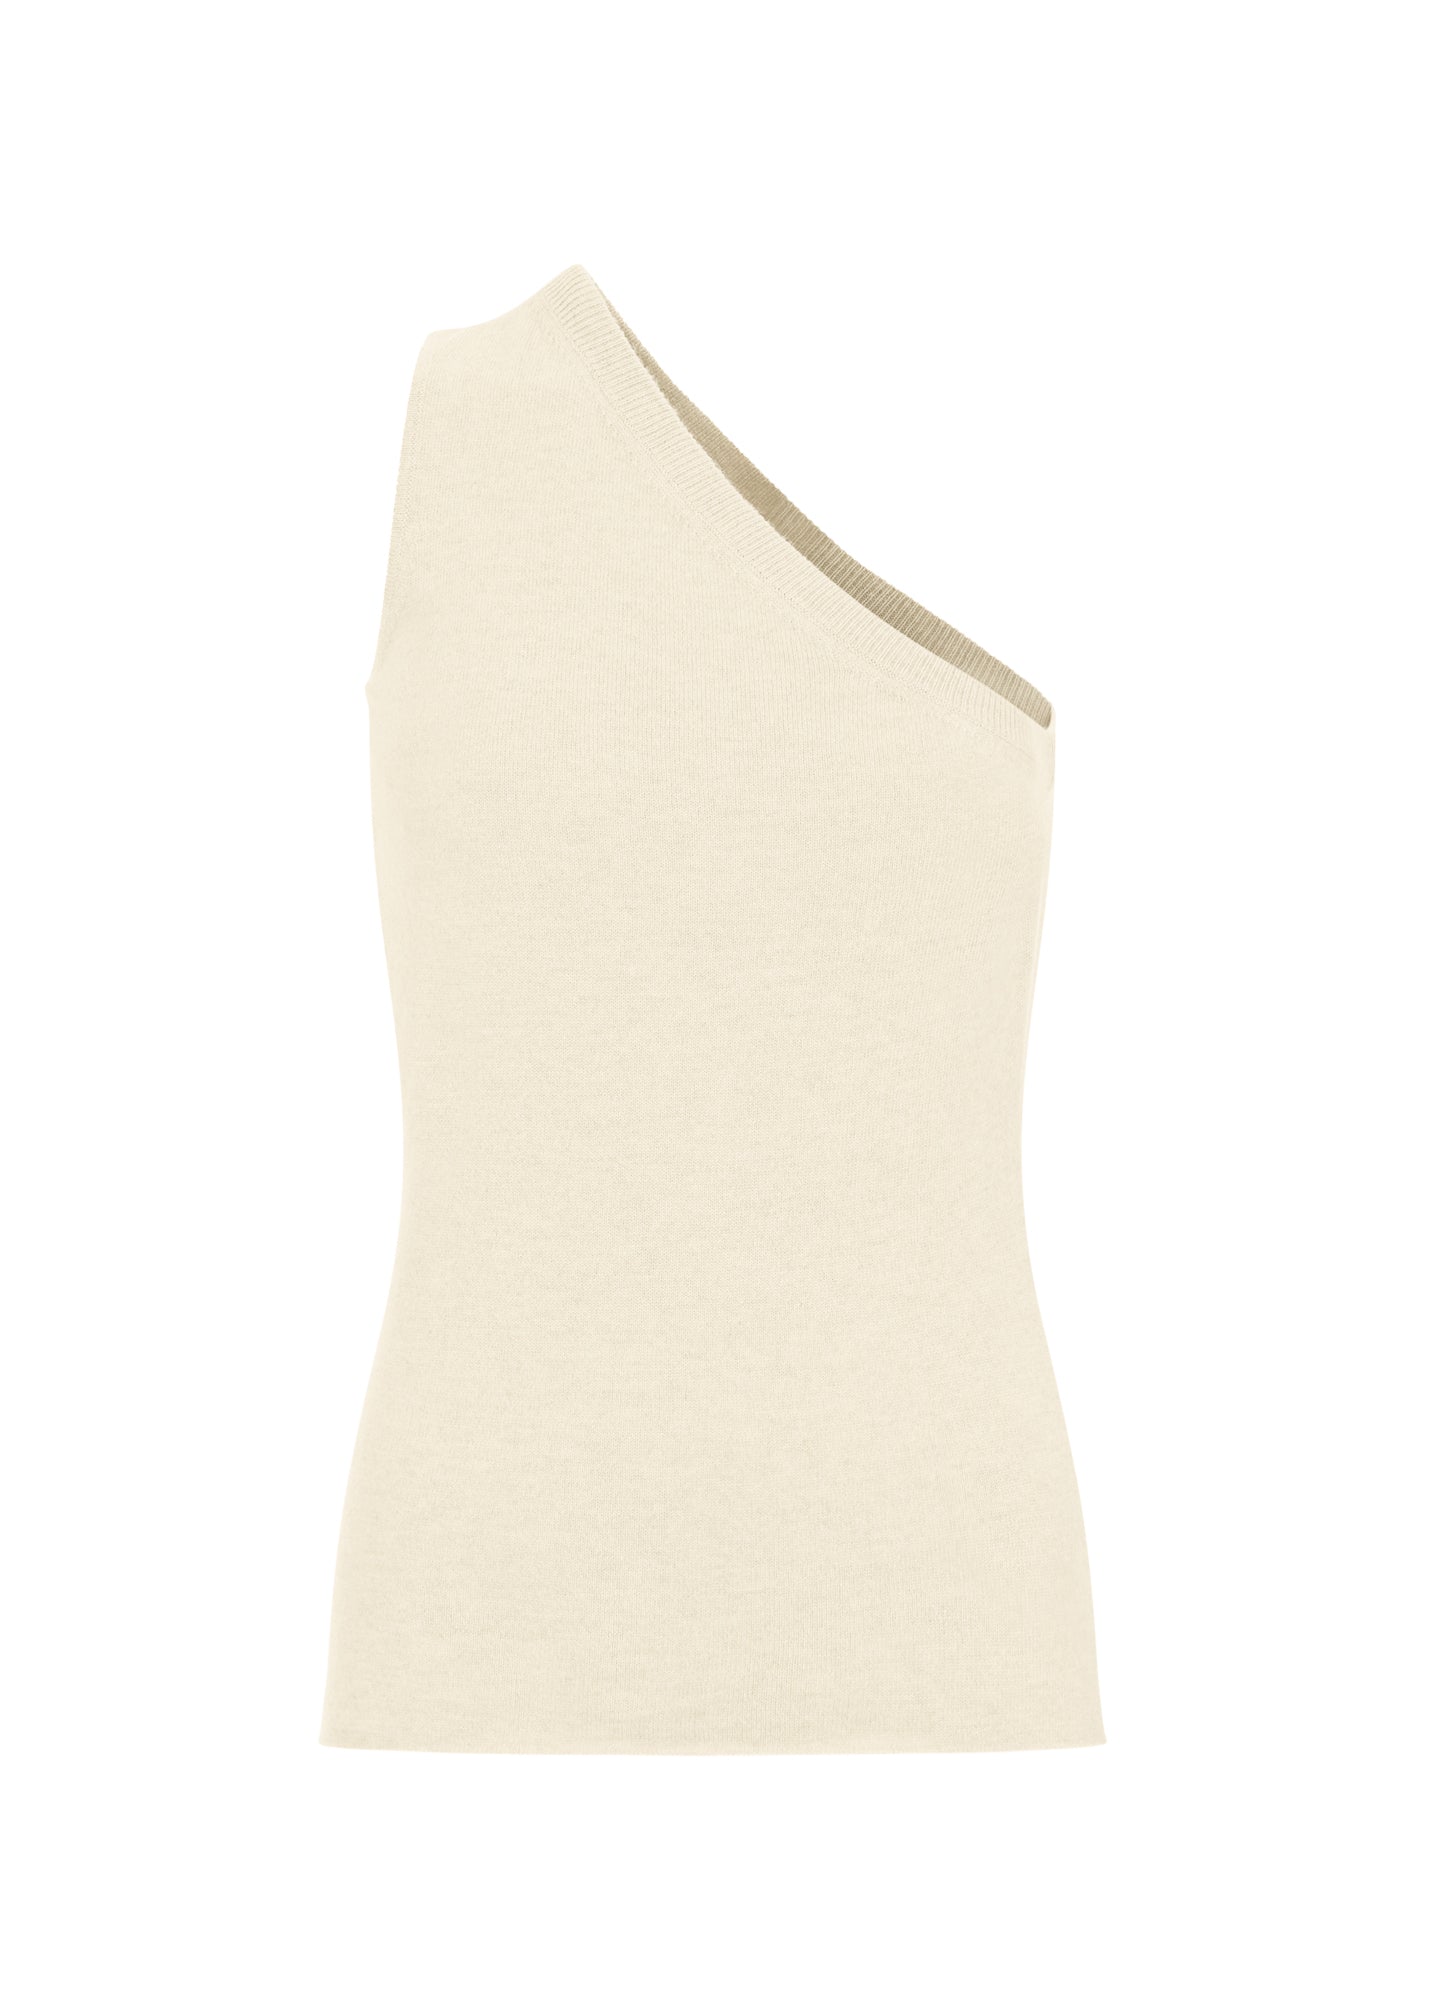 Designer cashmere asymmetrical one shoulder sleeveless top Black 